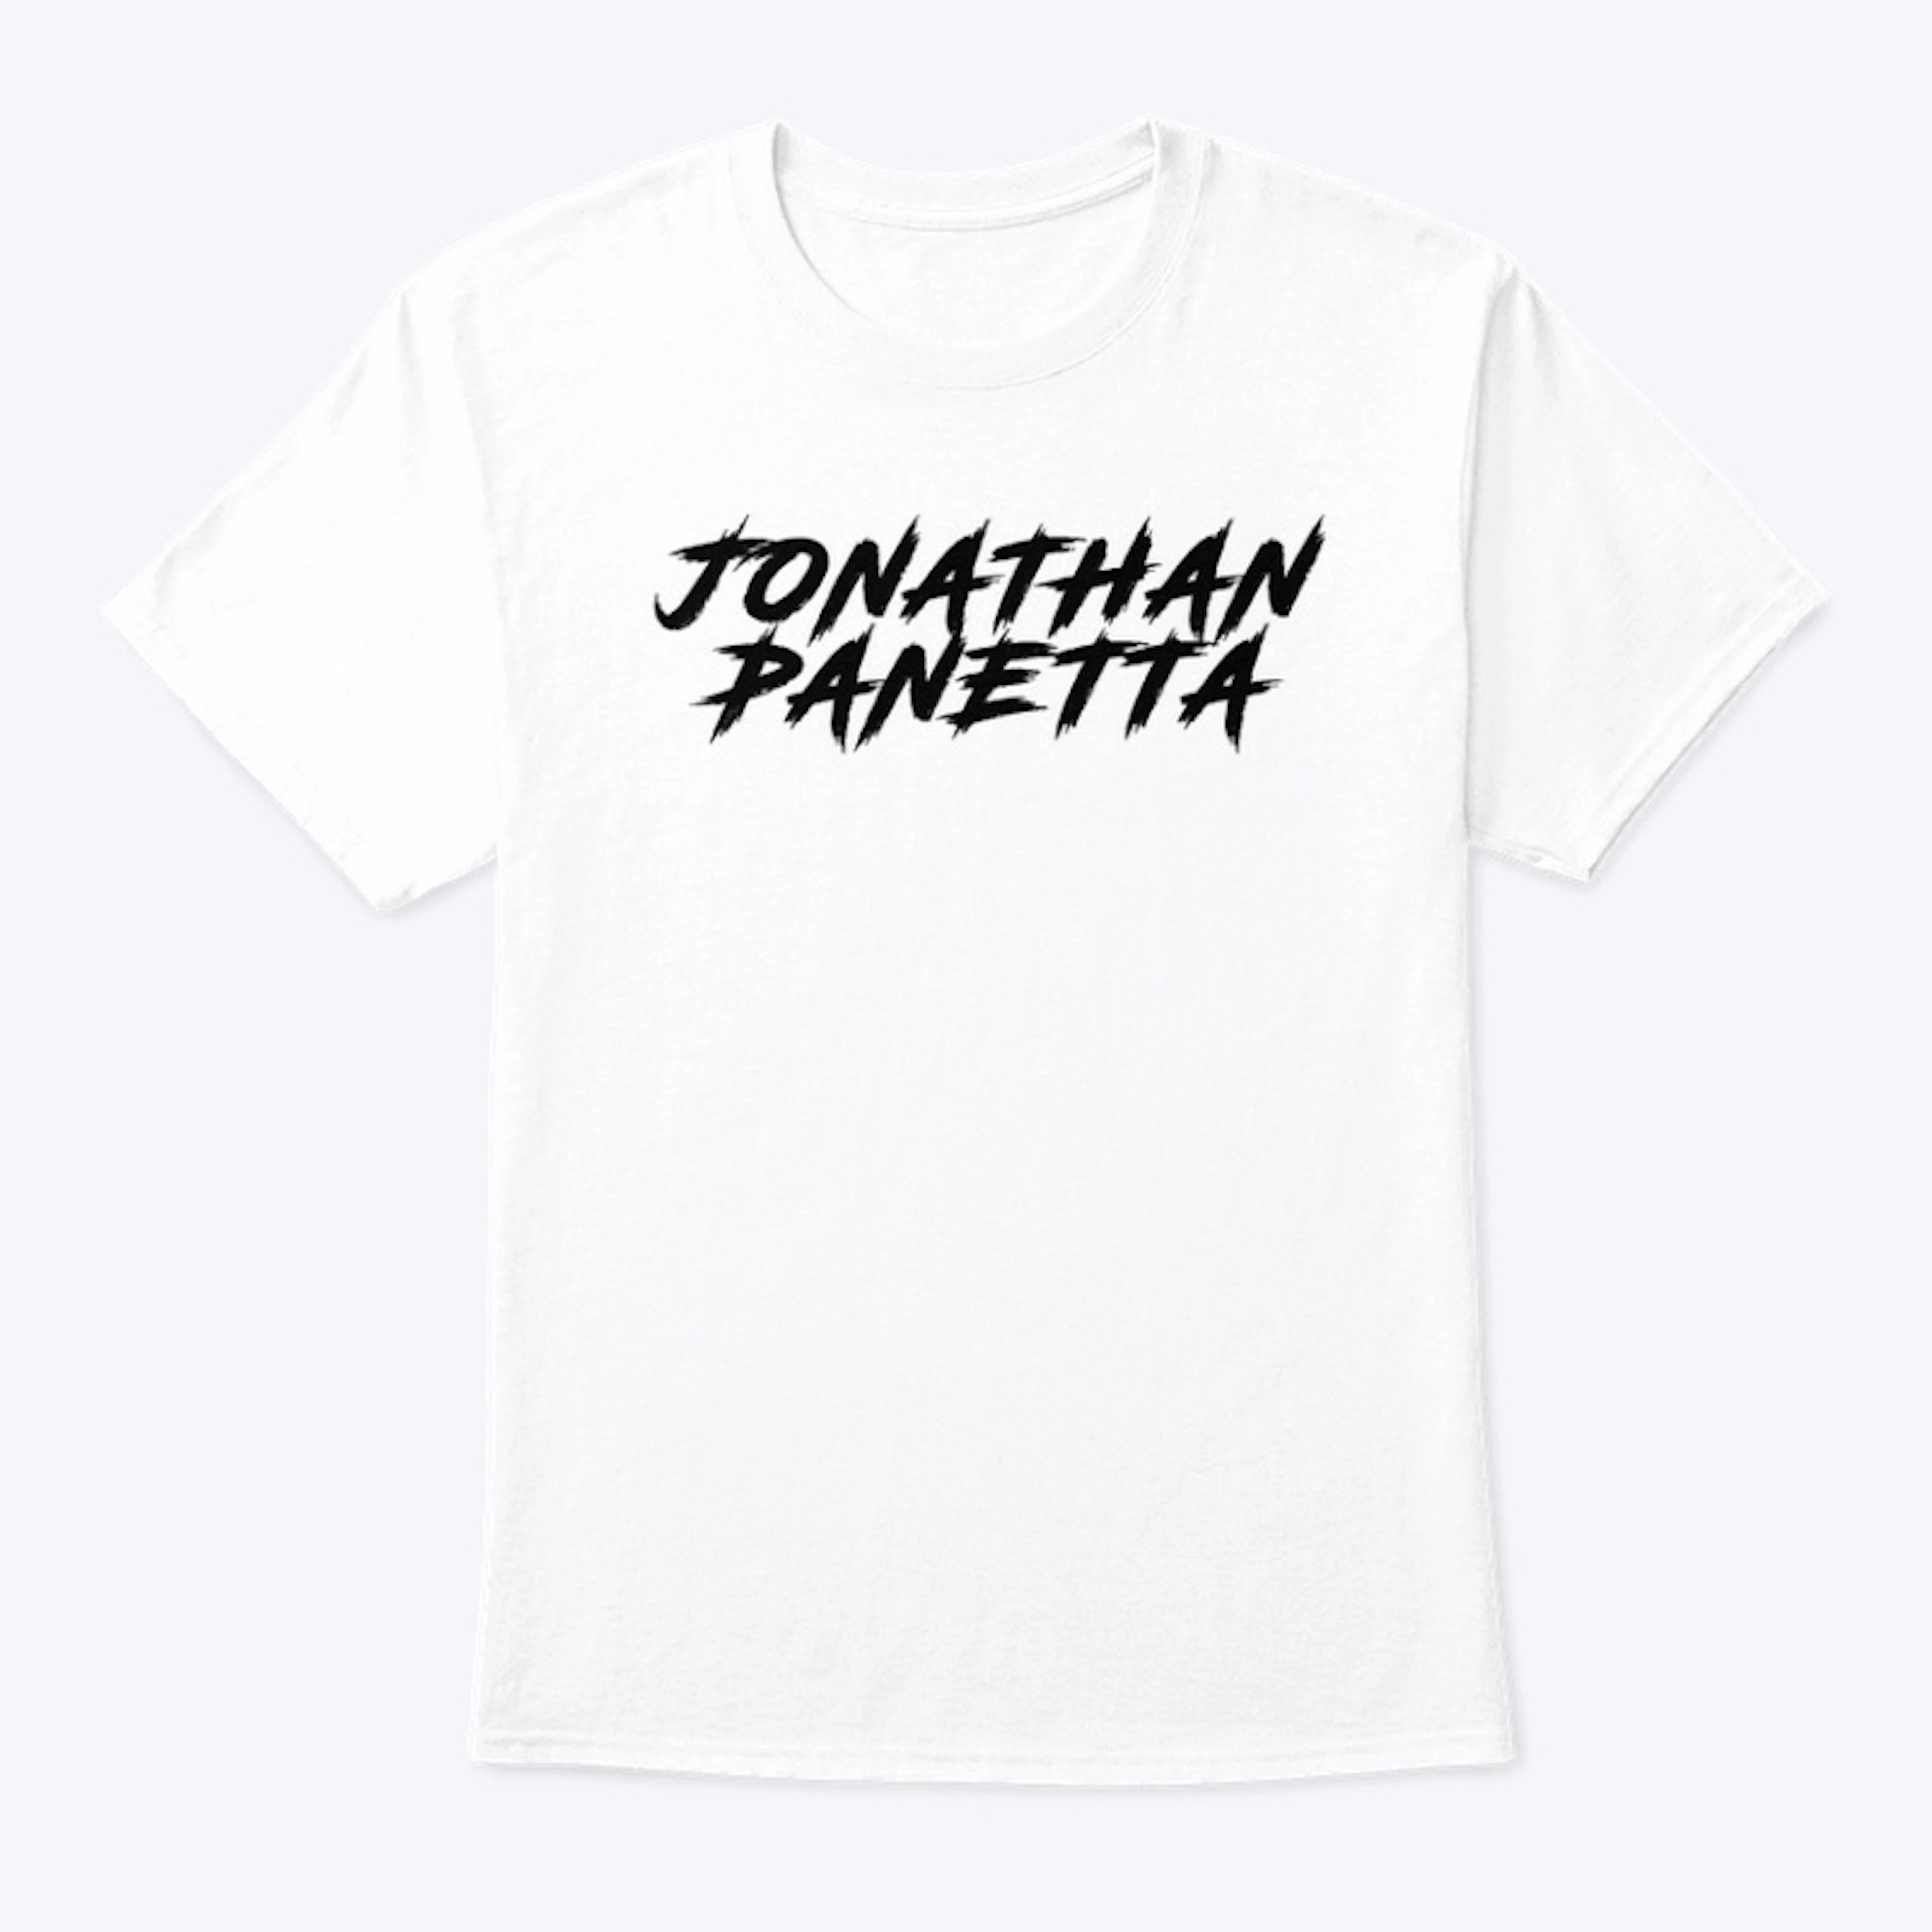 Jonathan Panetta Black logo T shirt 